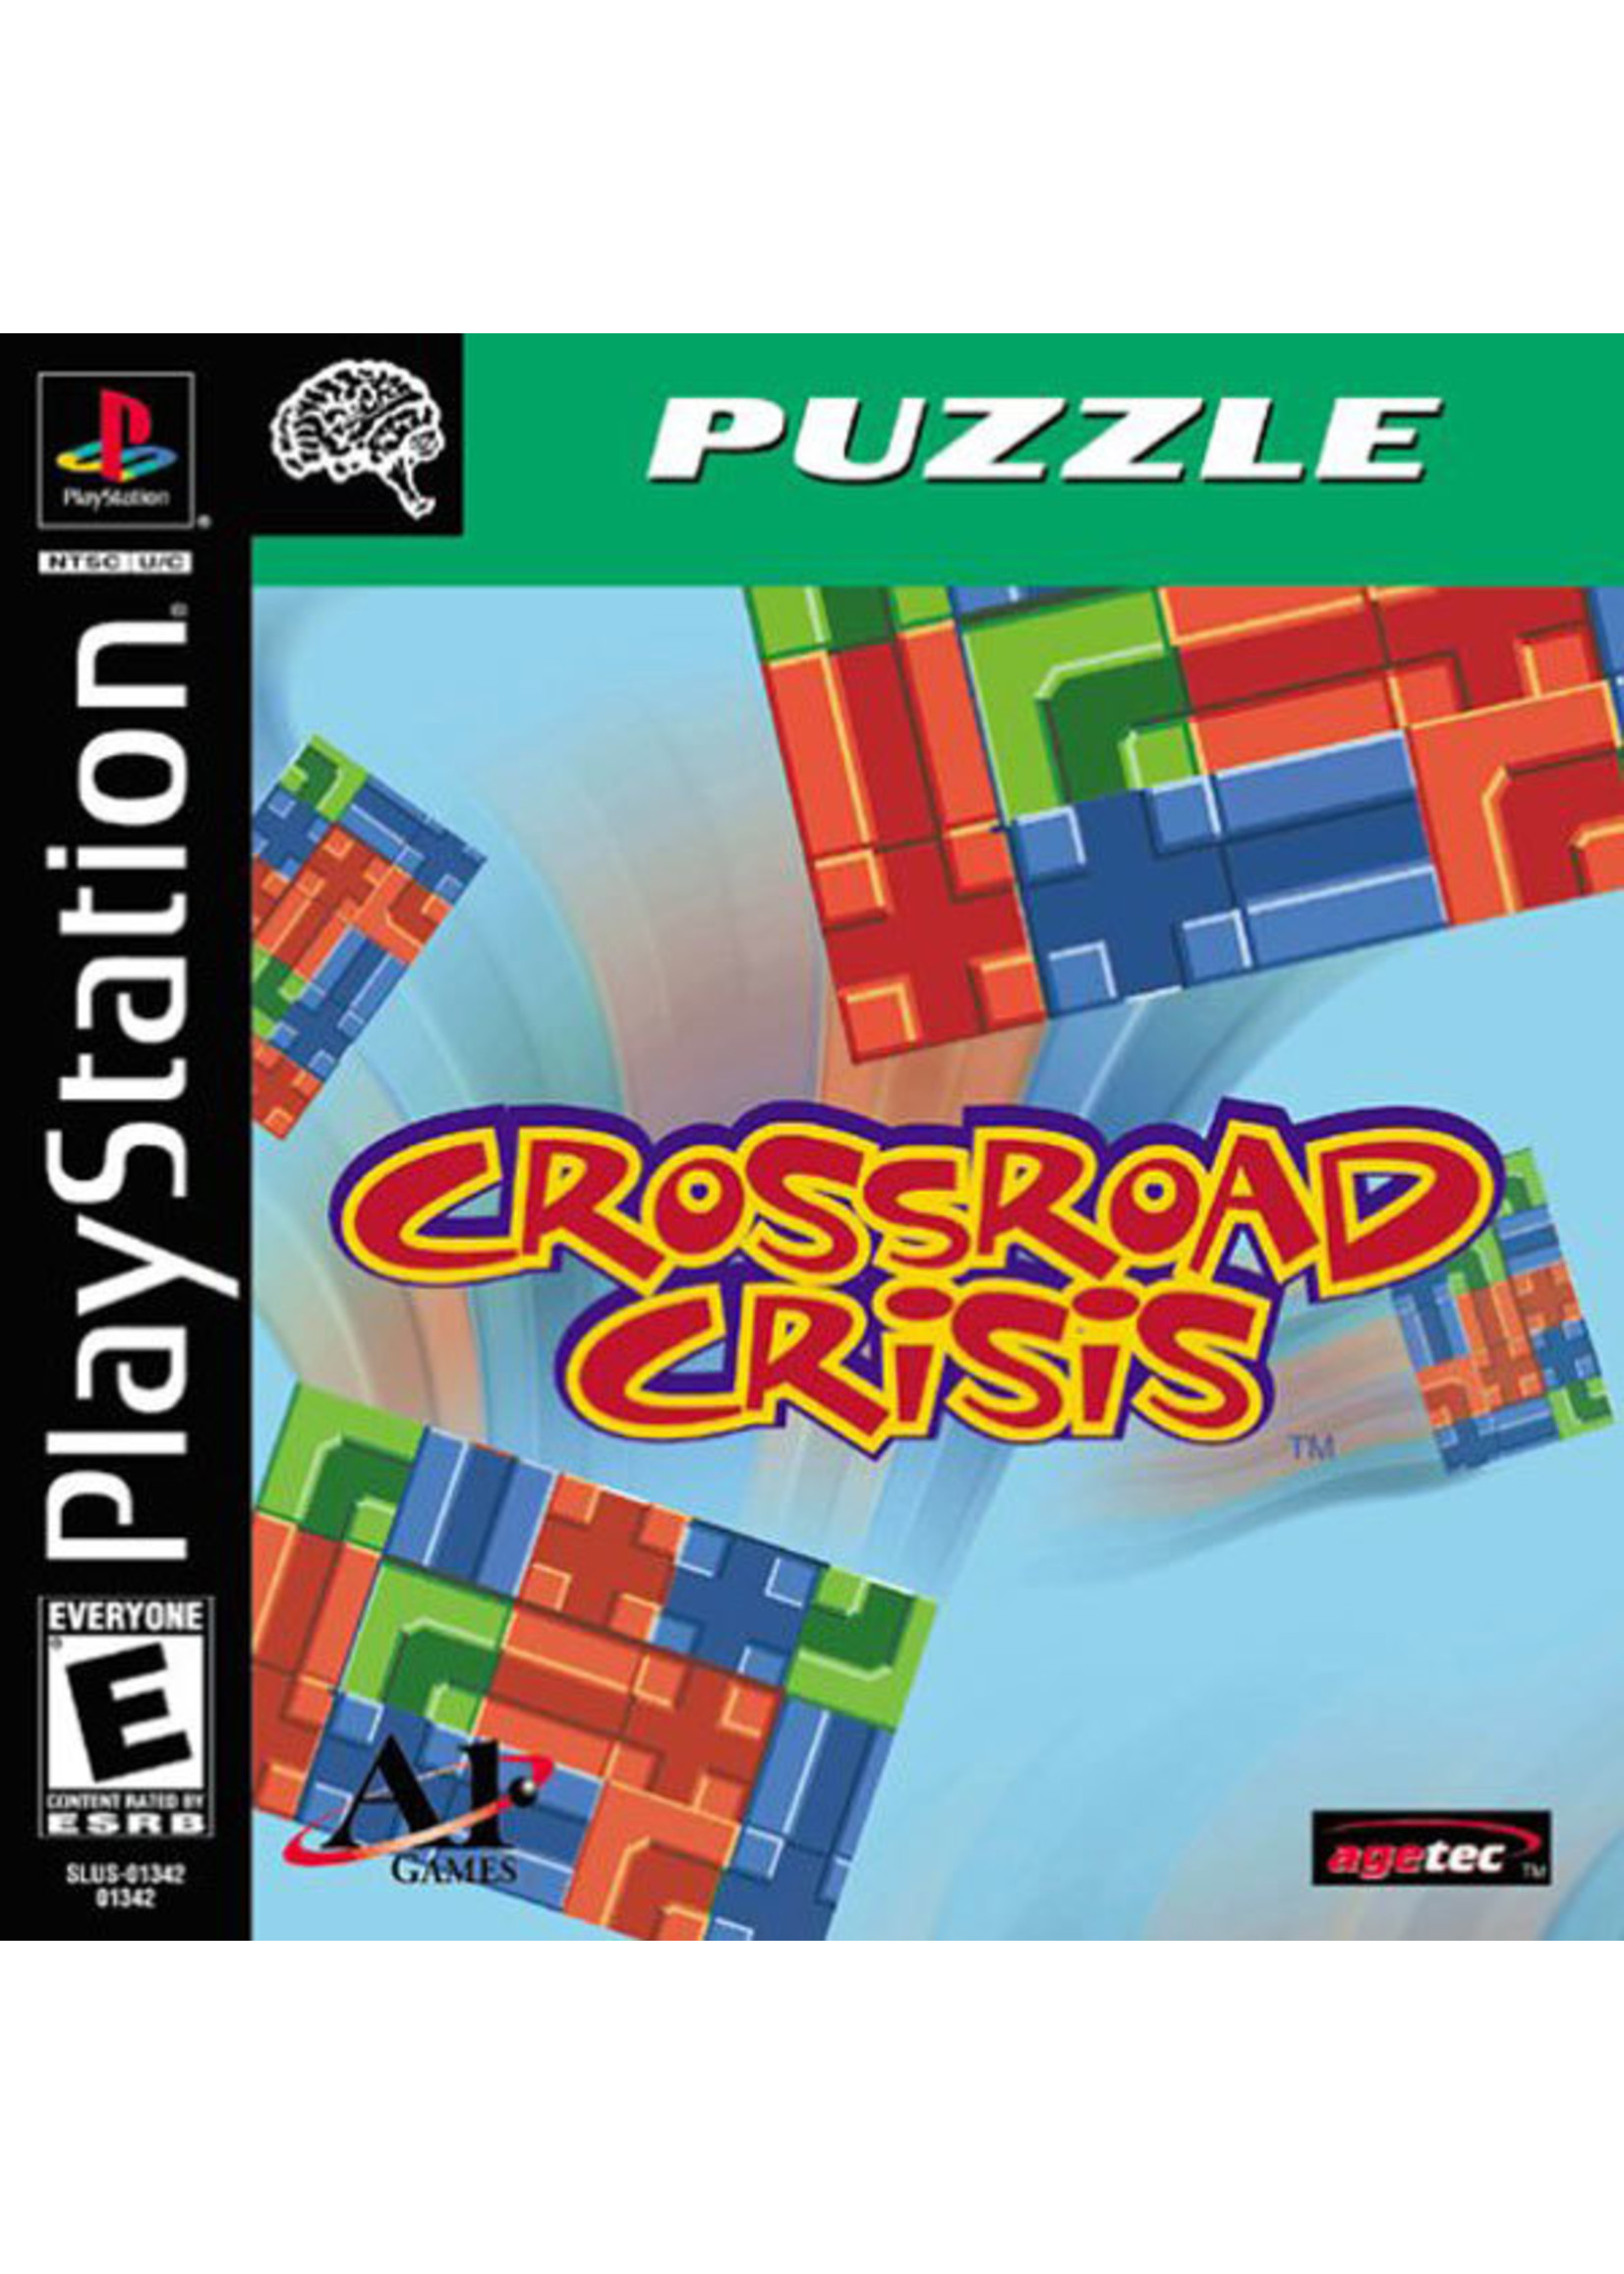 Sony Playstation 1 (PS1) Crossroad Crisis